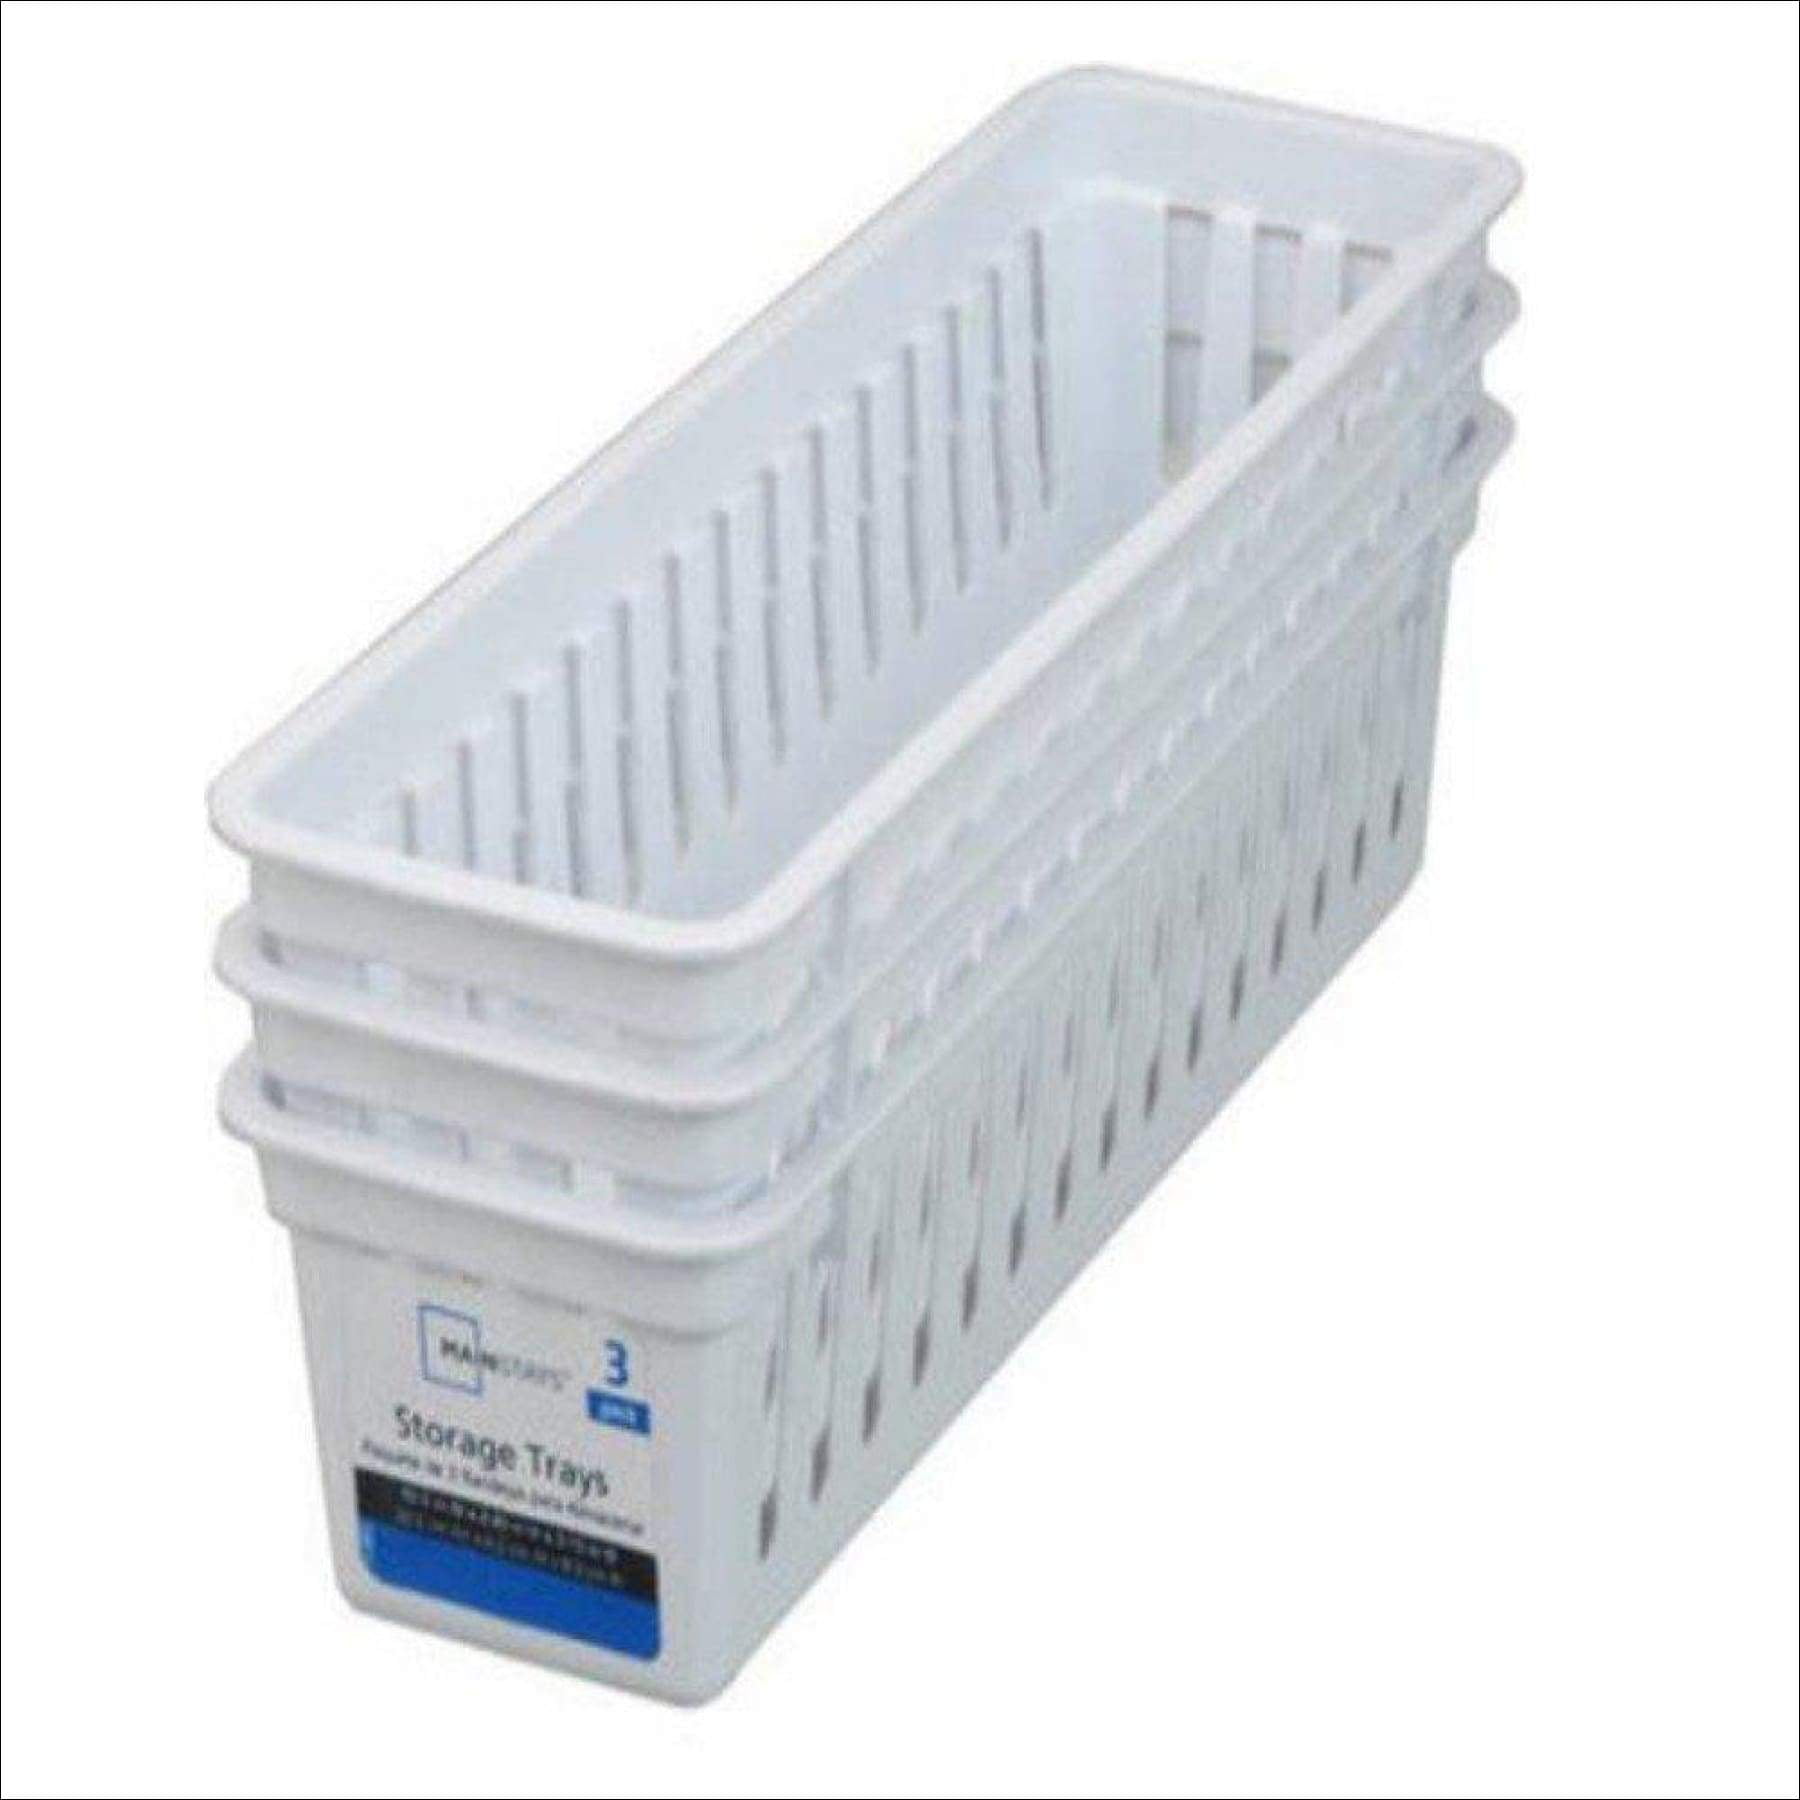 Plastic Stackable Basket Tray, Set of 3 - General - Storage & Organizer